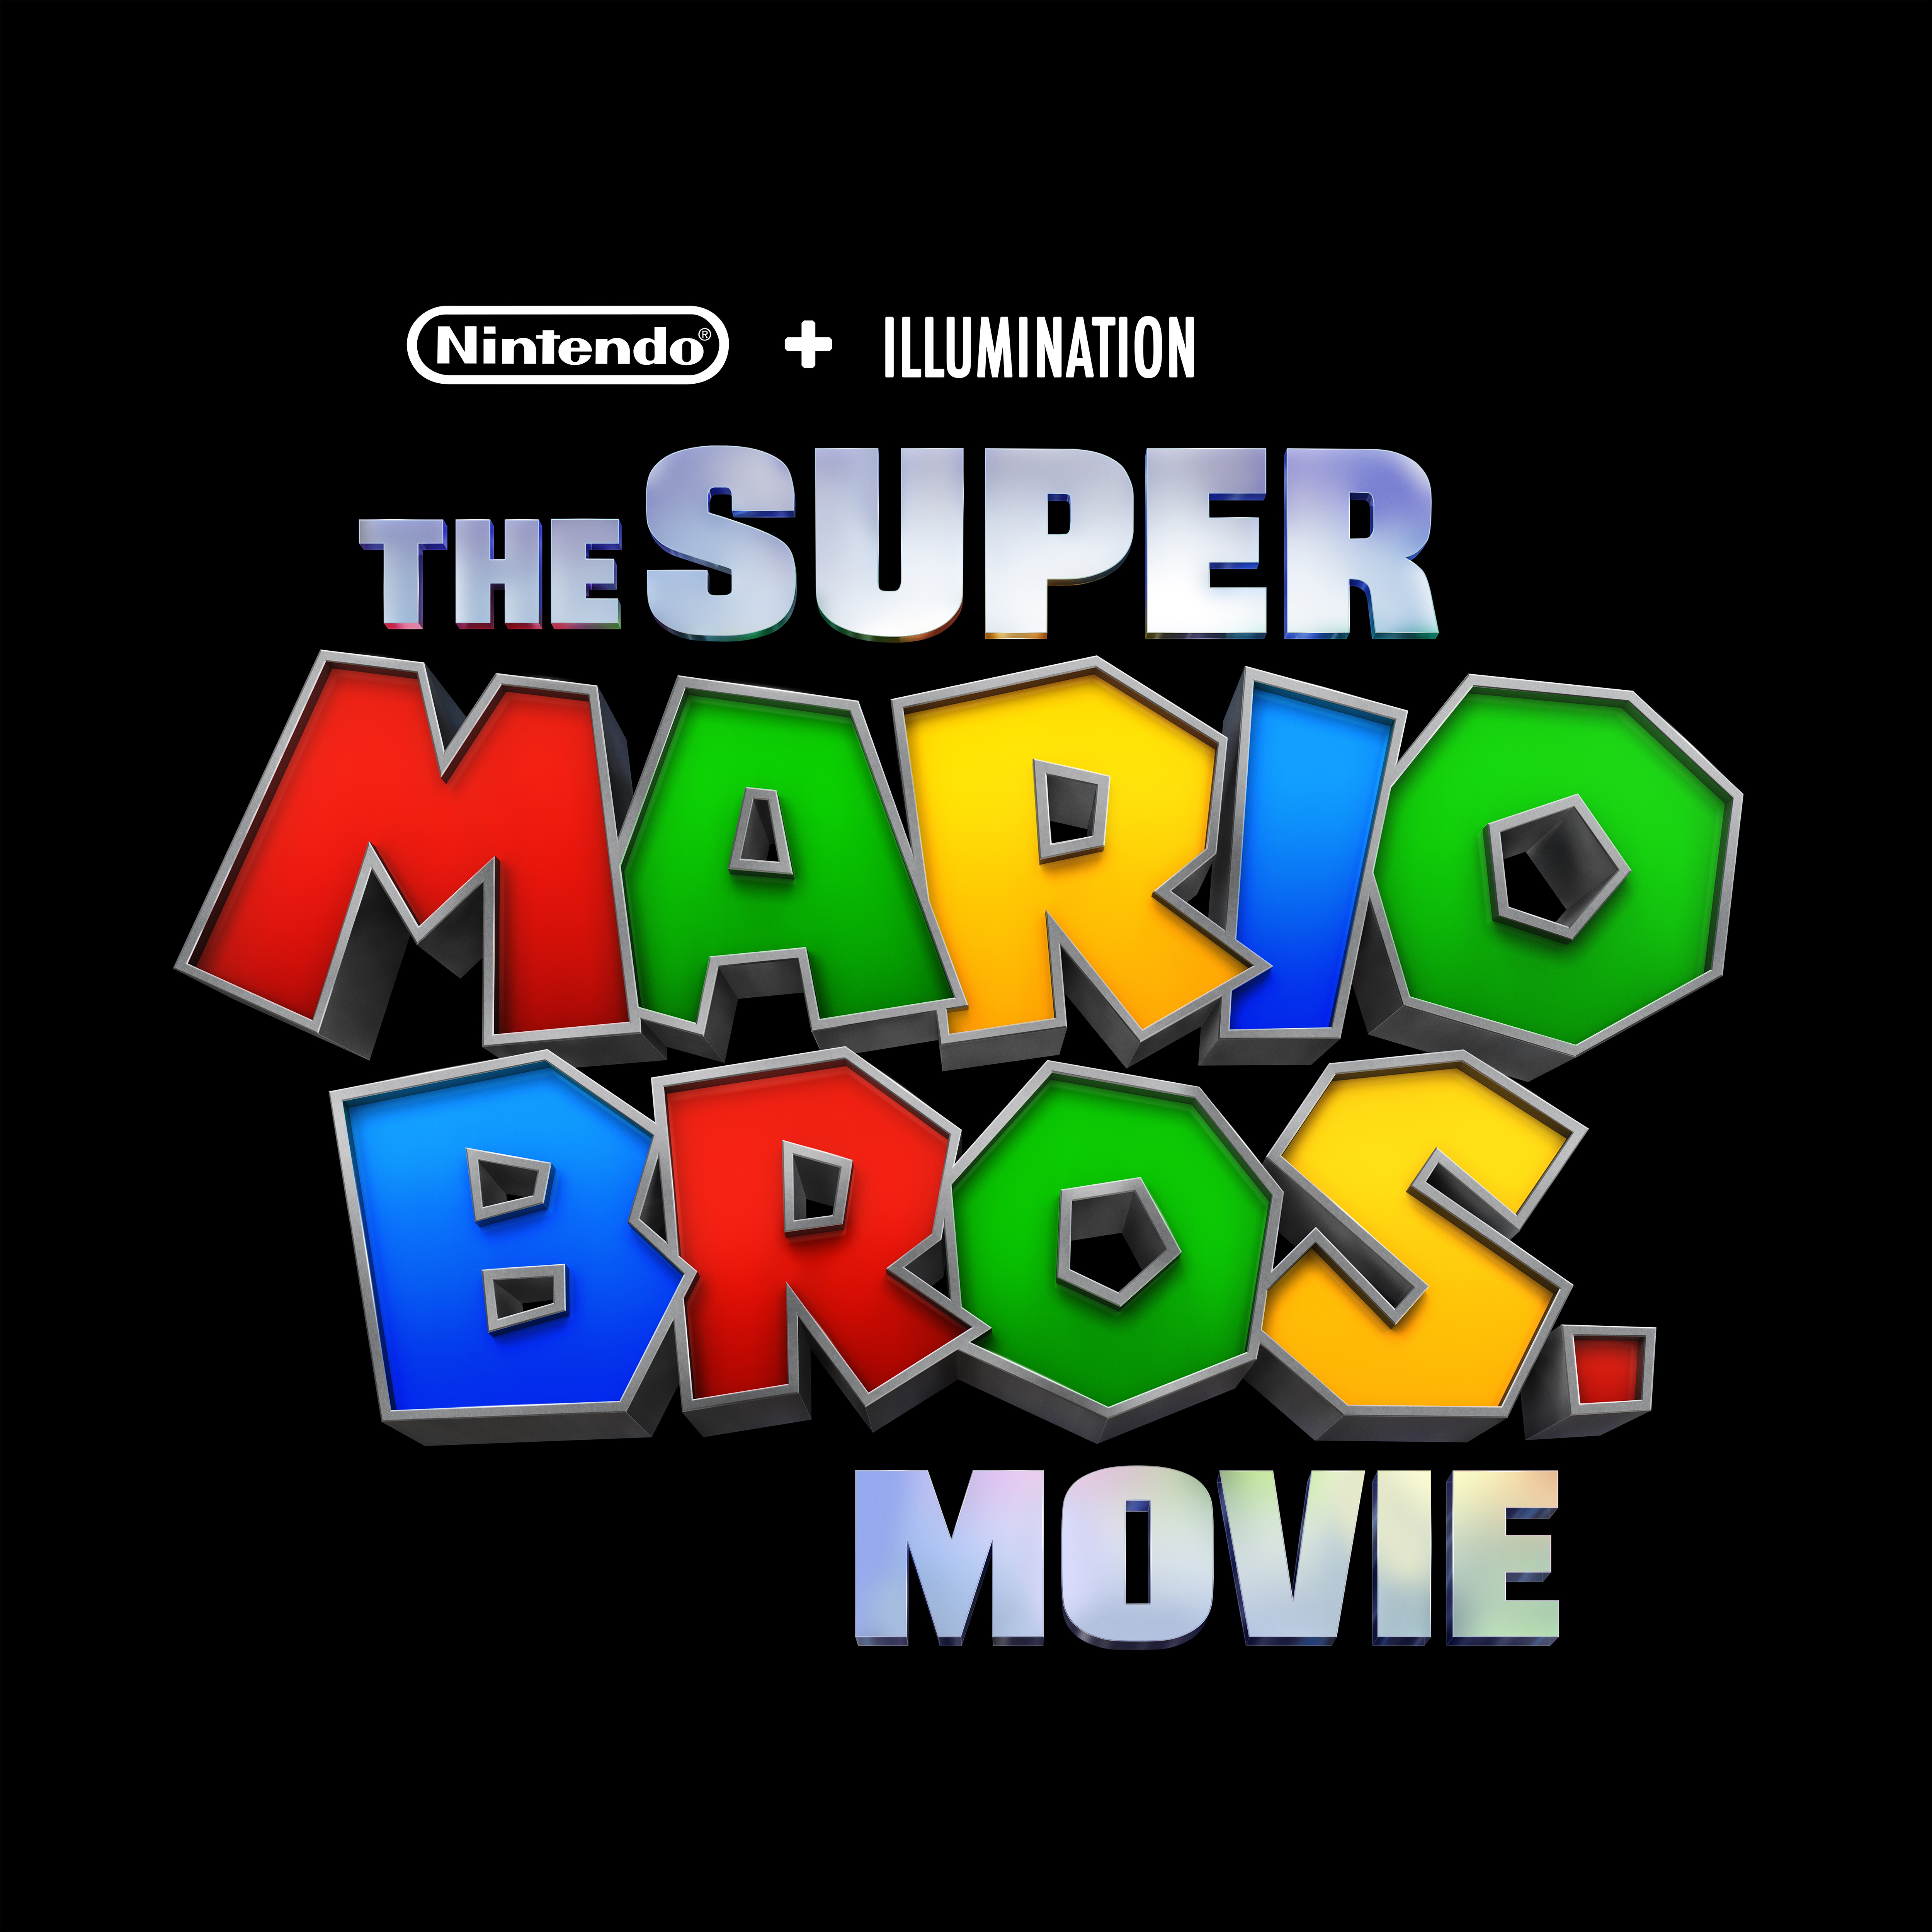 Logo for The Super Mario Bros. Movie with black background and Nintendo+Illumination logos